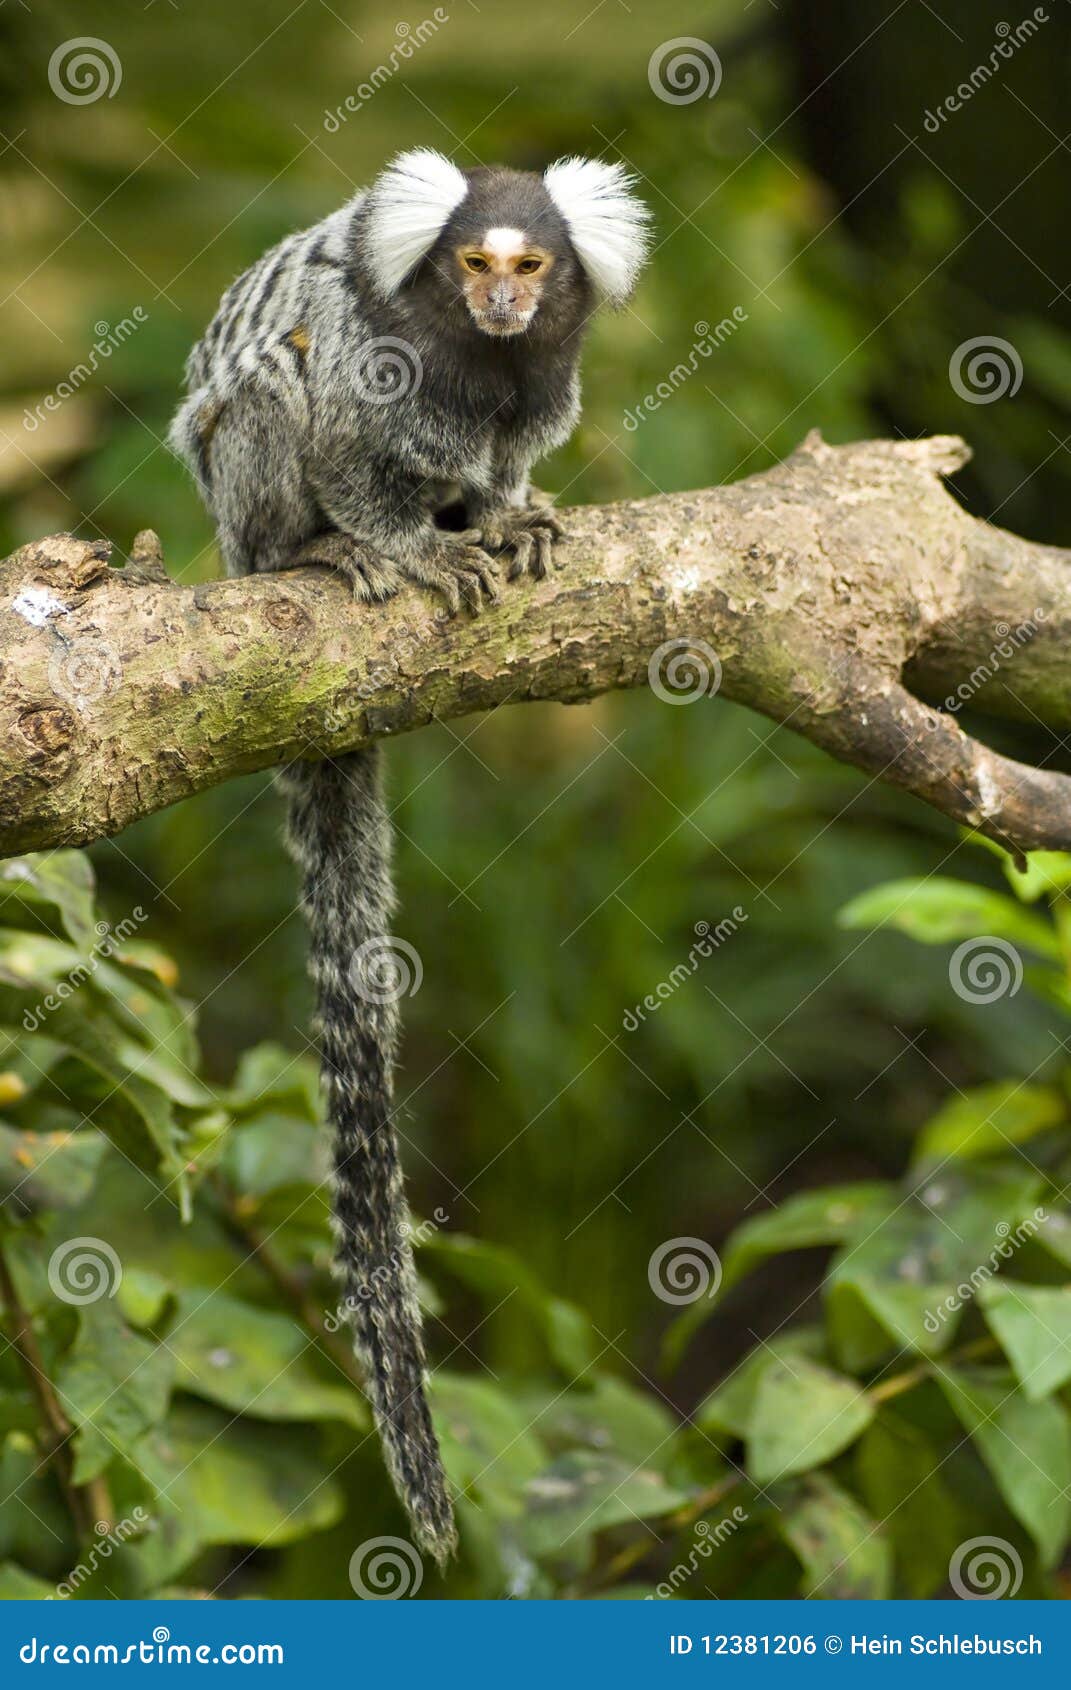 marmoset monkey on a branch